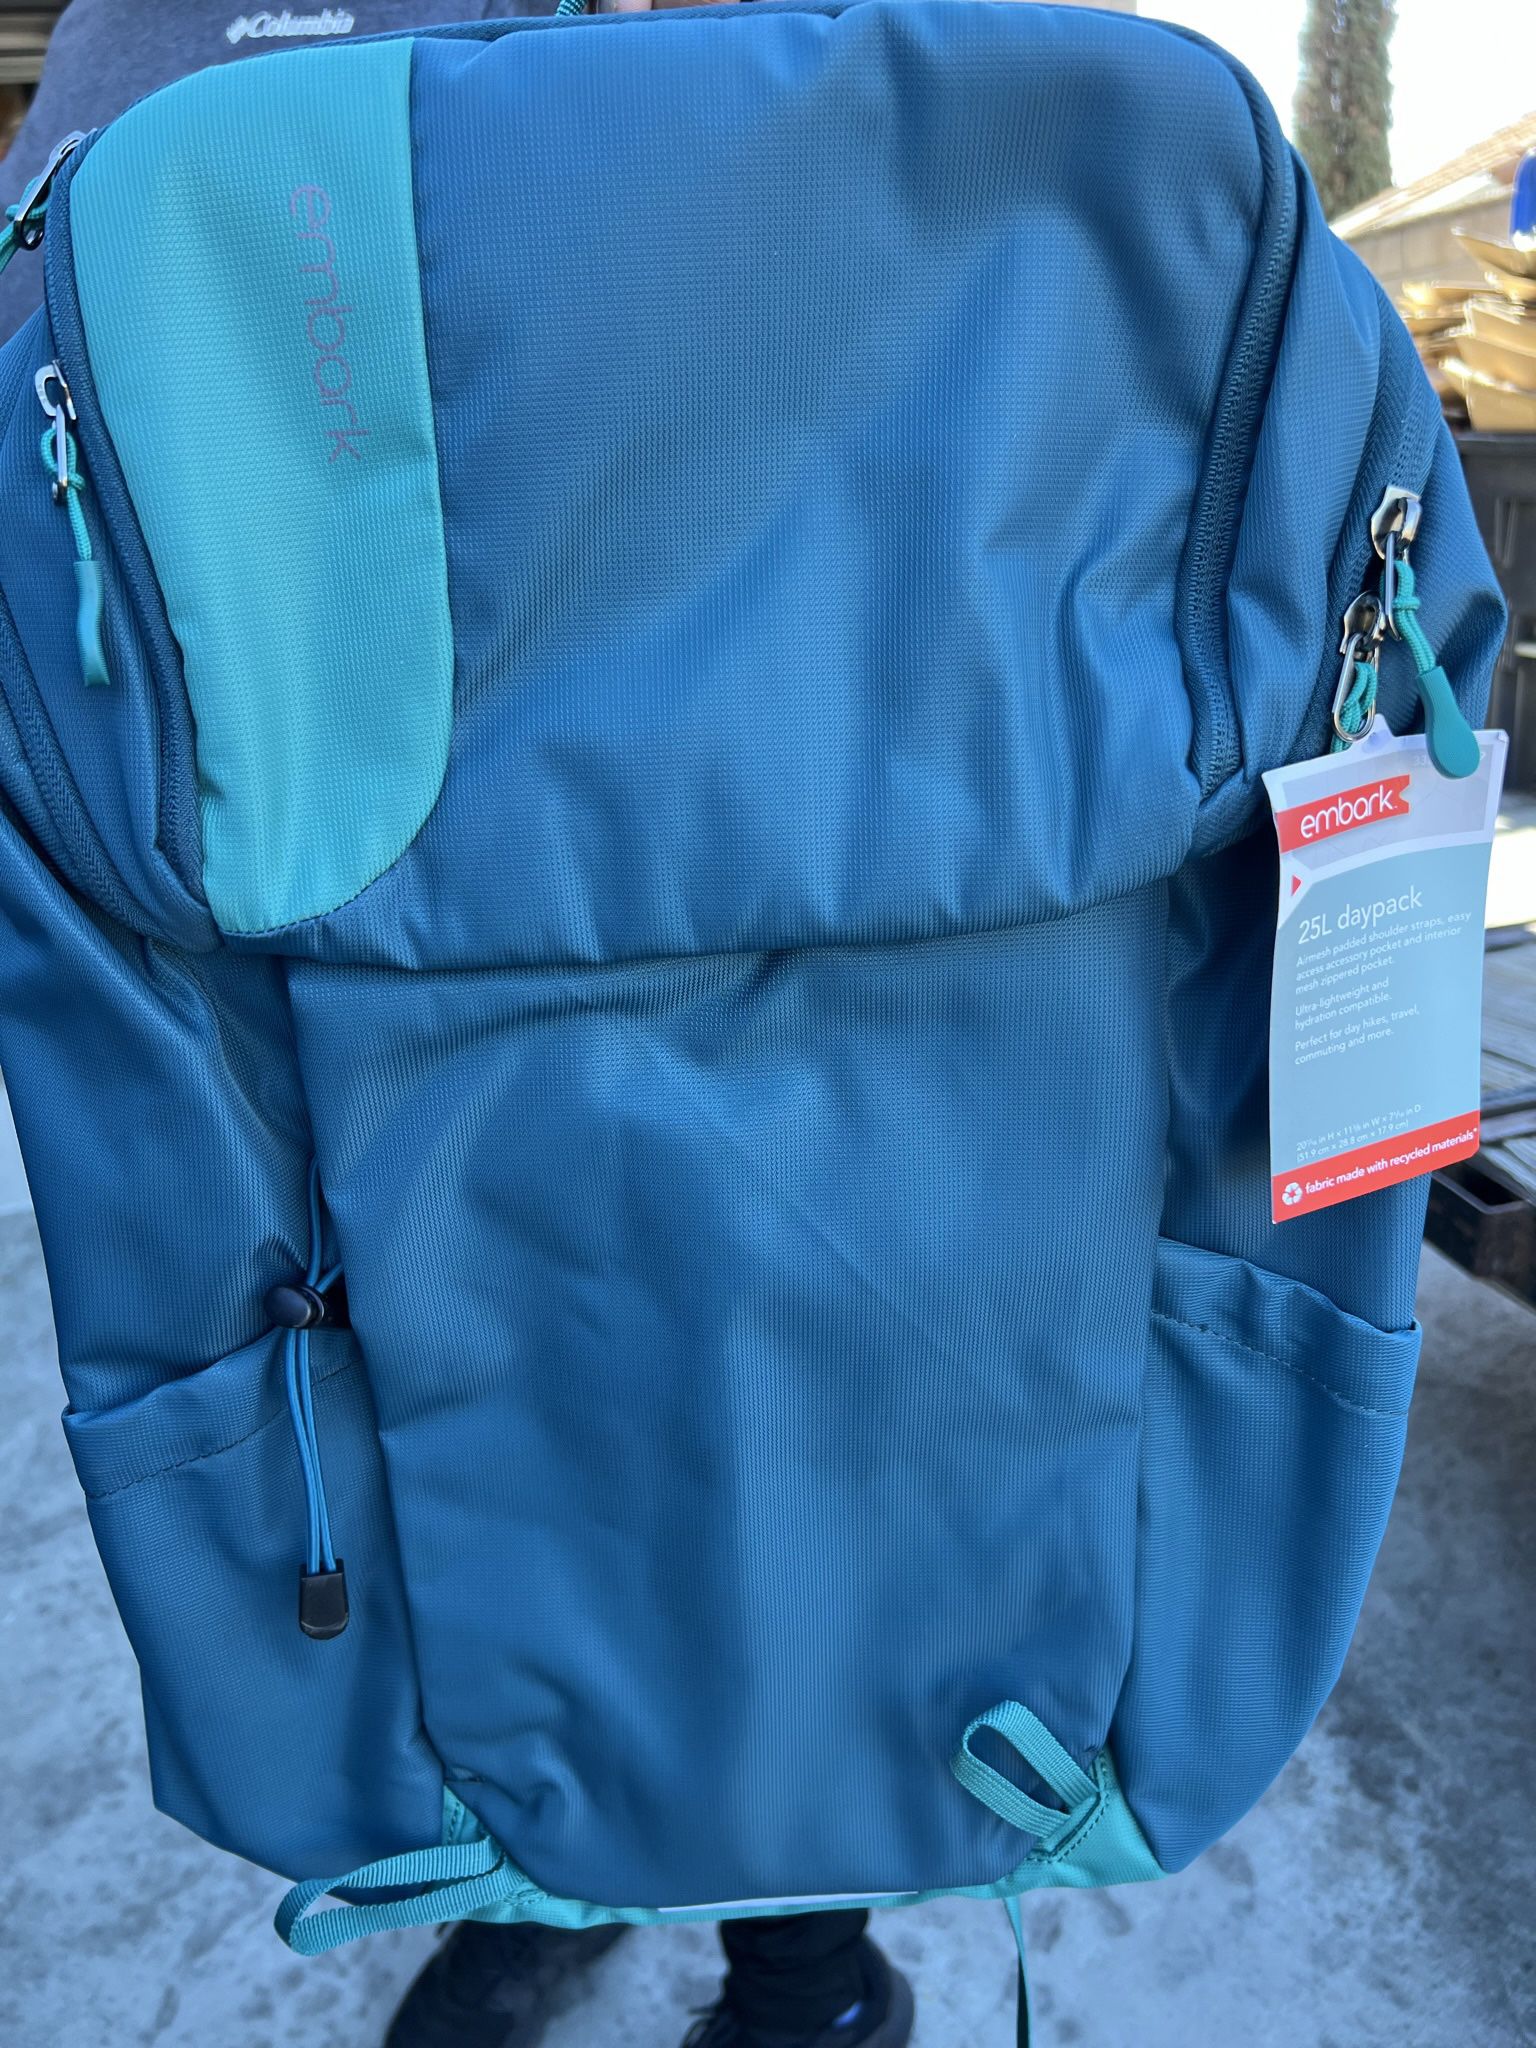 New Target Brand Backpack Have 15 Left 